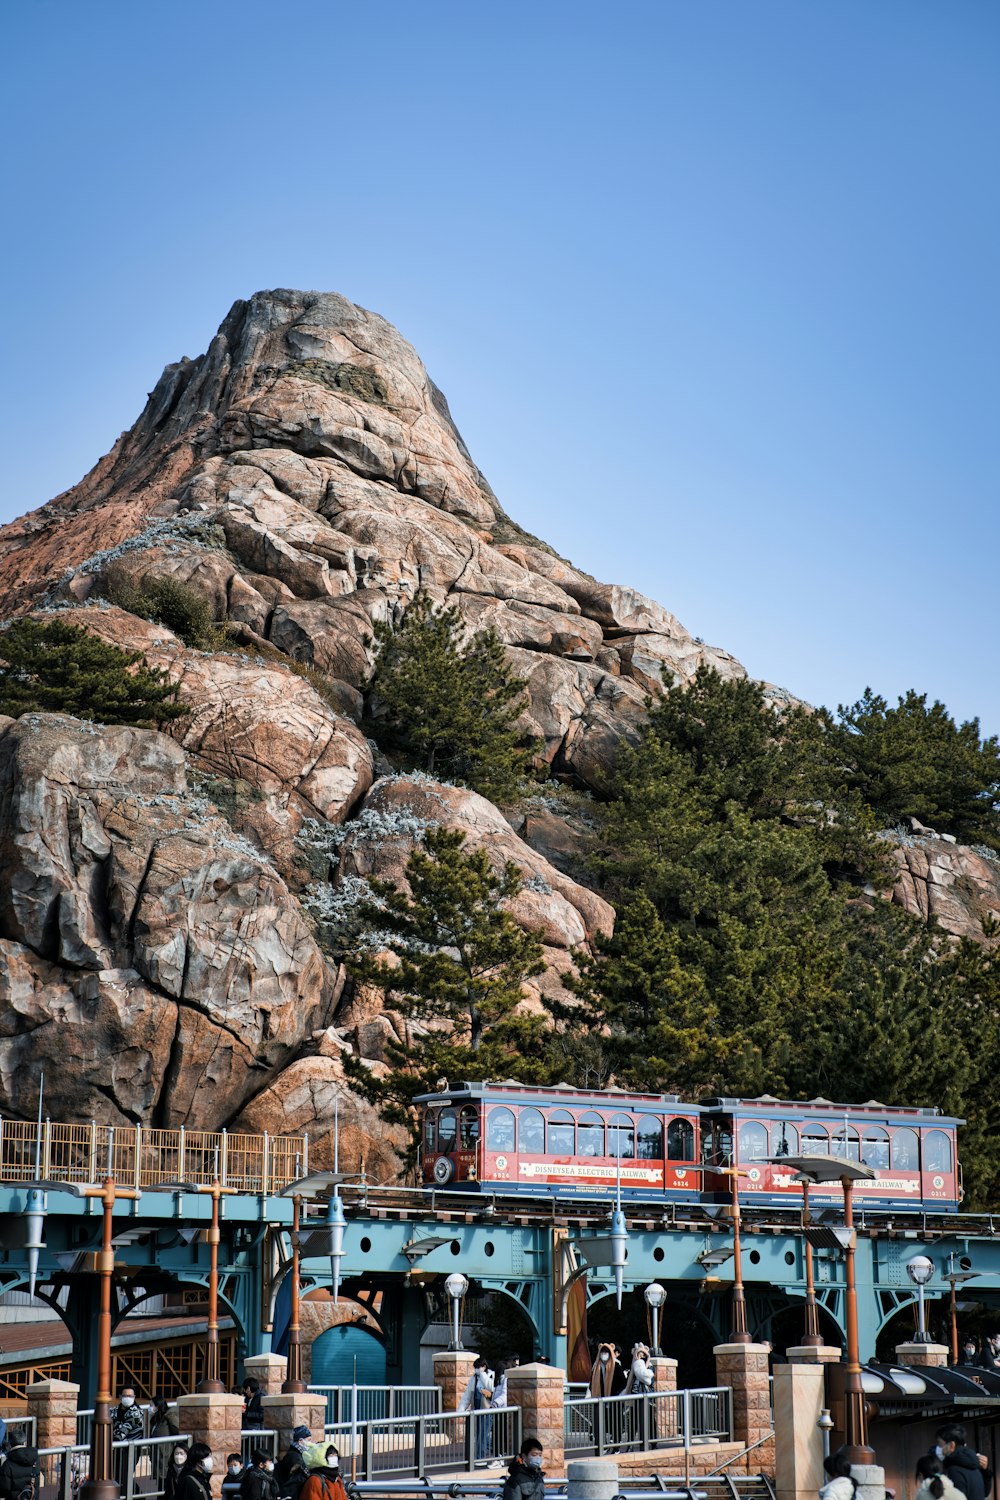 a train on a track near a mountain